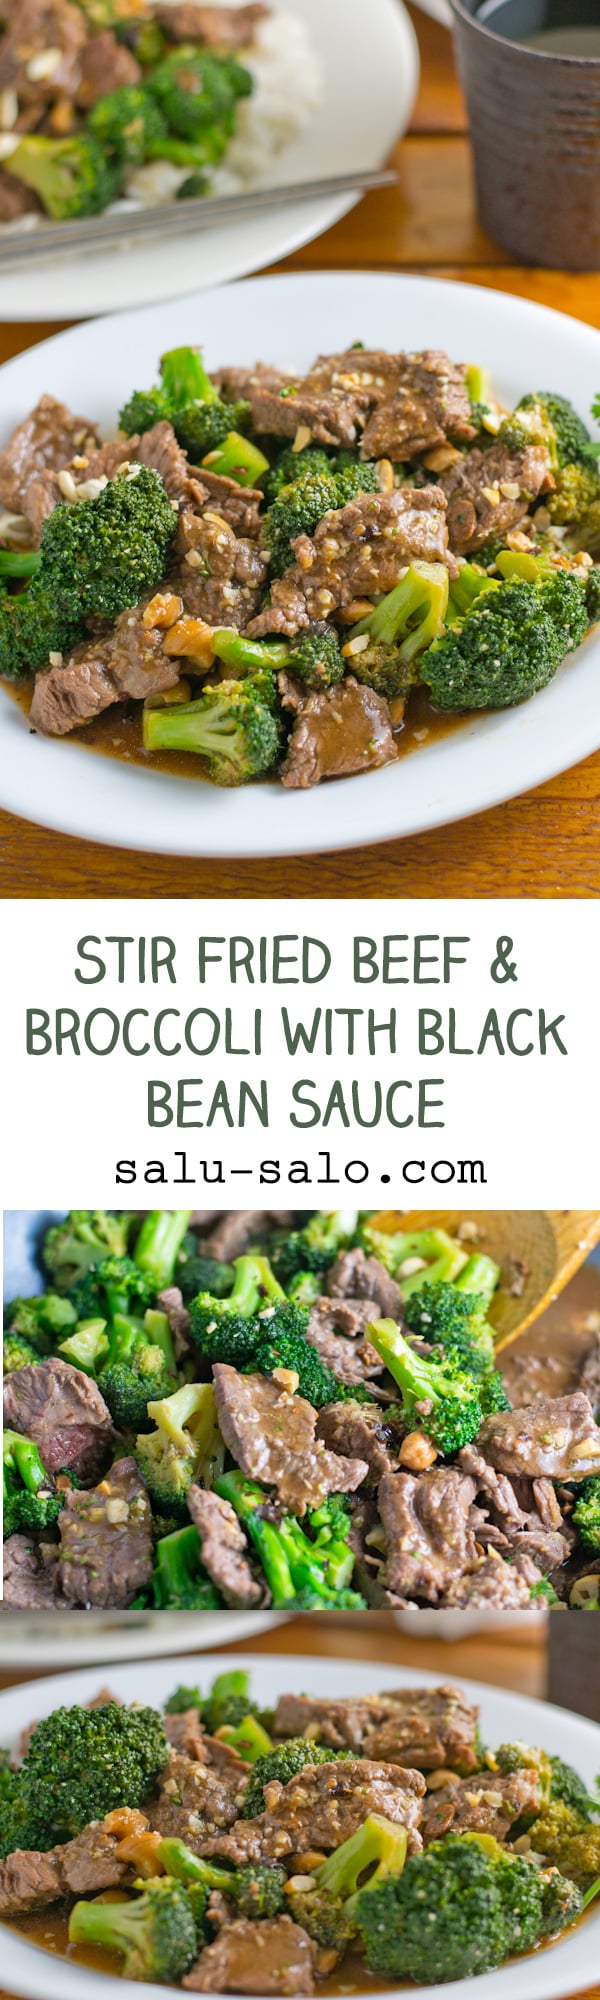 Stir Fried Beef & Broccoli with Black Bean Sauce - Salu Salo Recipes